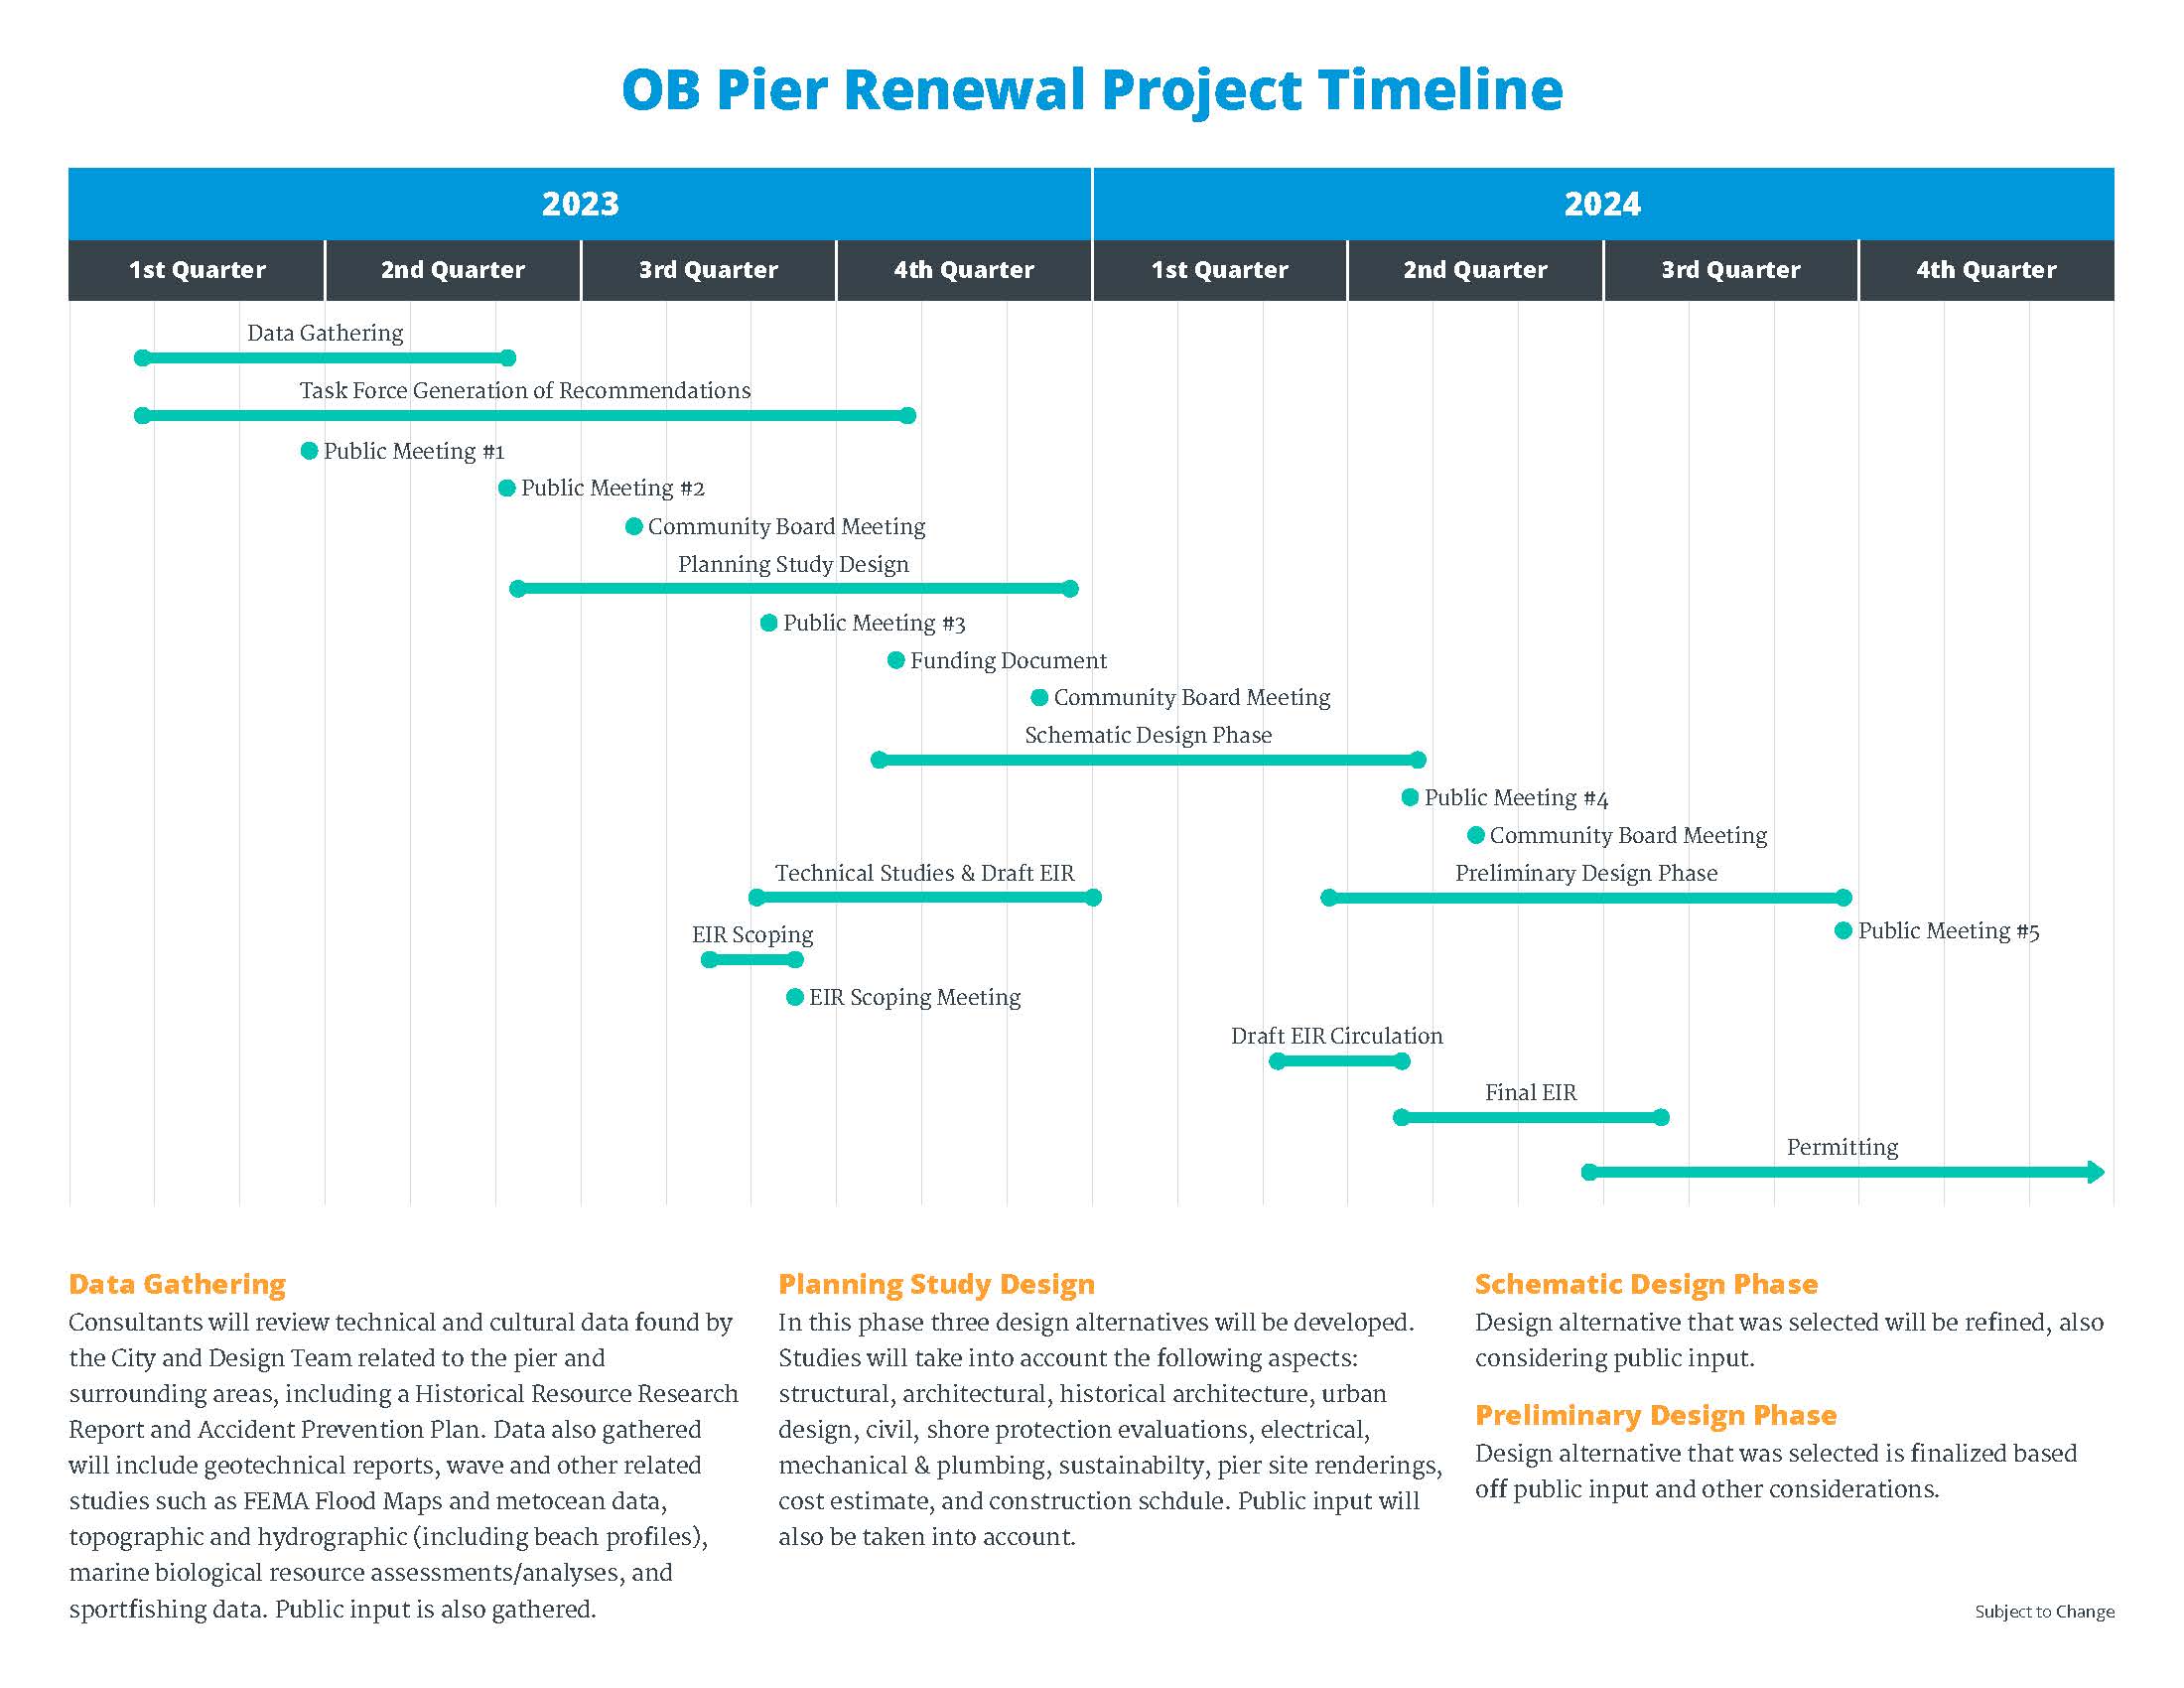 Timeline of OB Pier renewal project